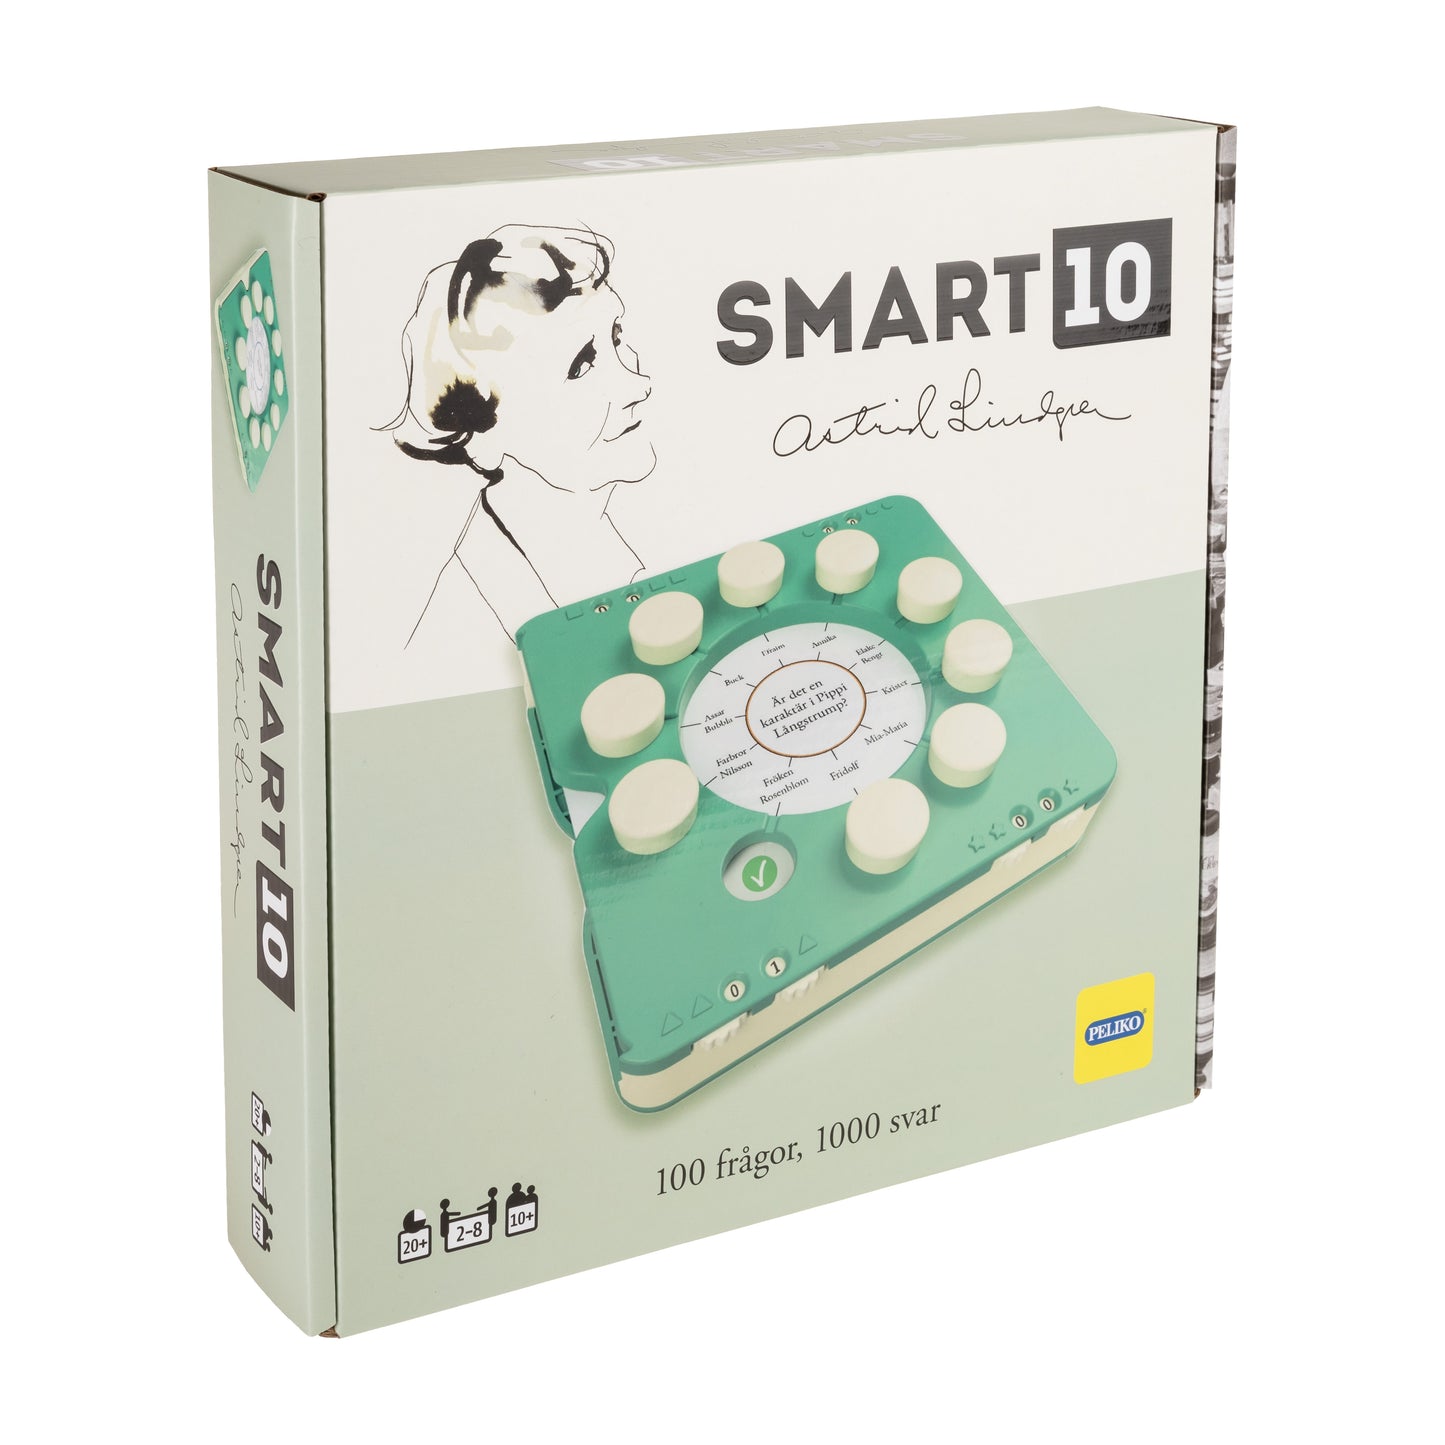 Smart 10 | Astrid Lindgren | Spel